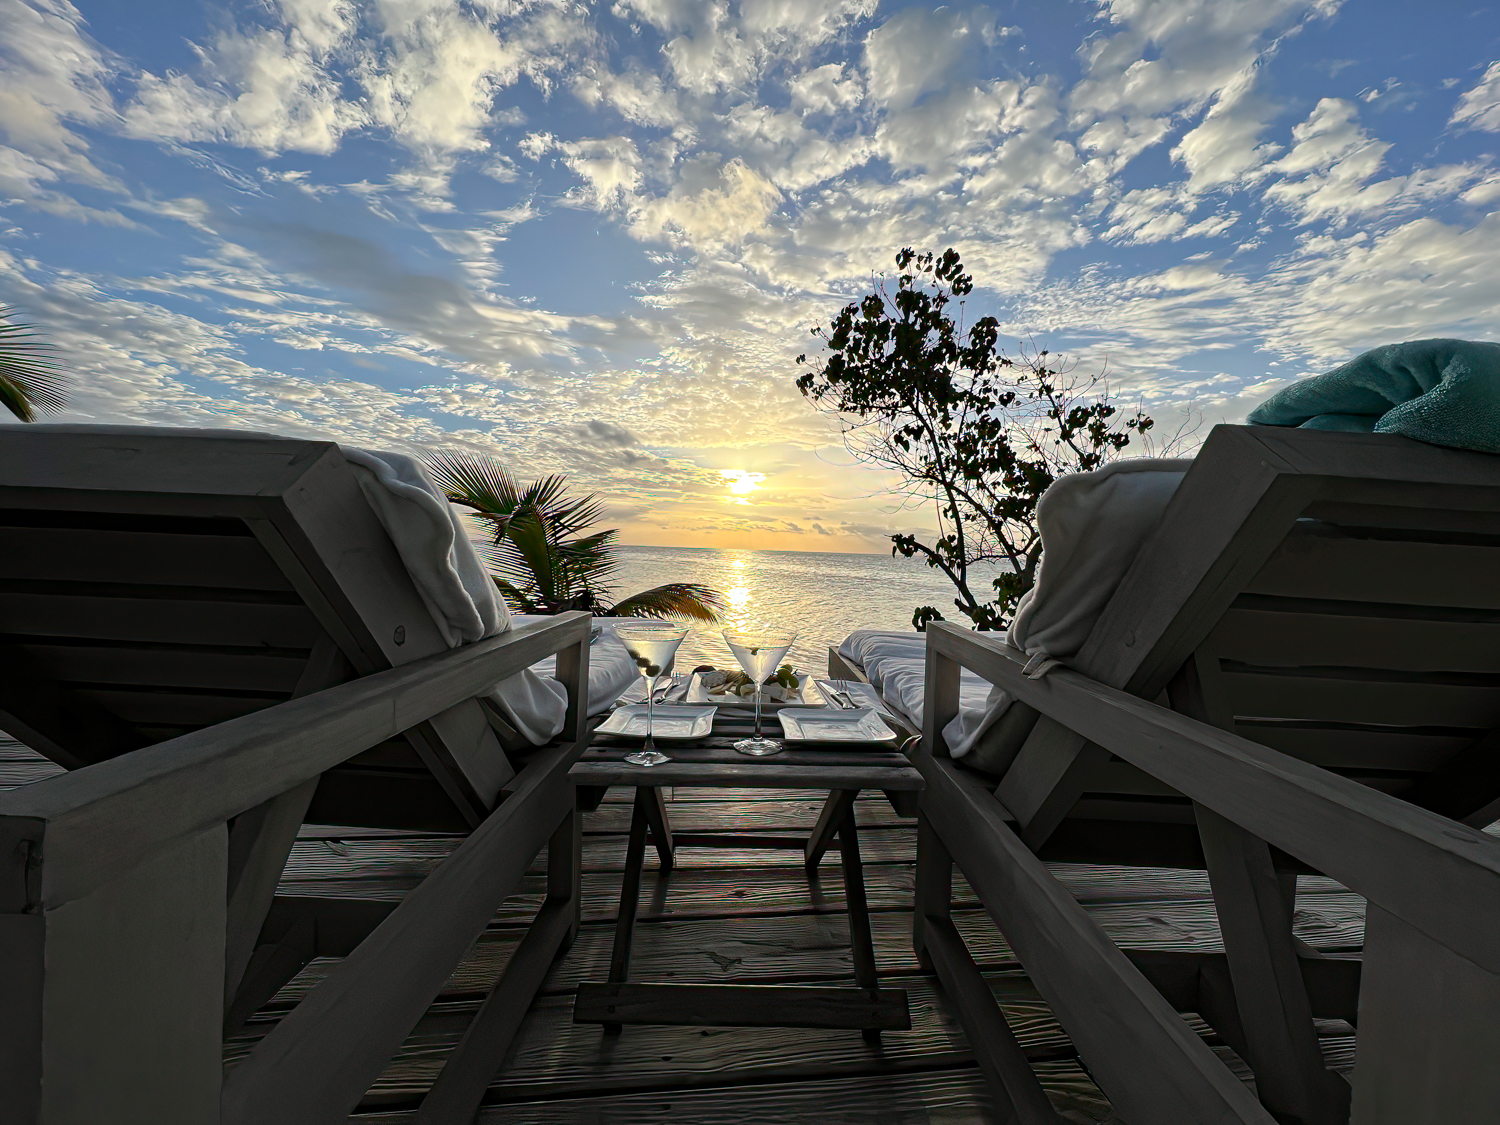 Cayo Espanto - a Luxury Private Island Resort Off The Coast of Belize